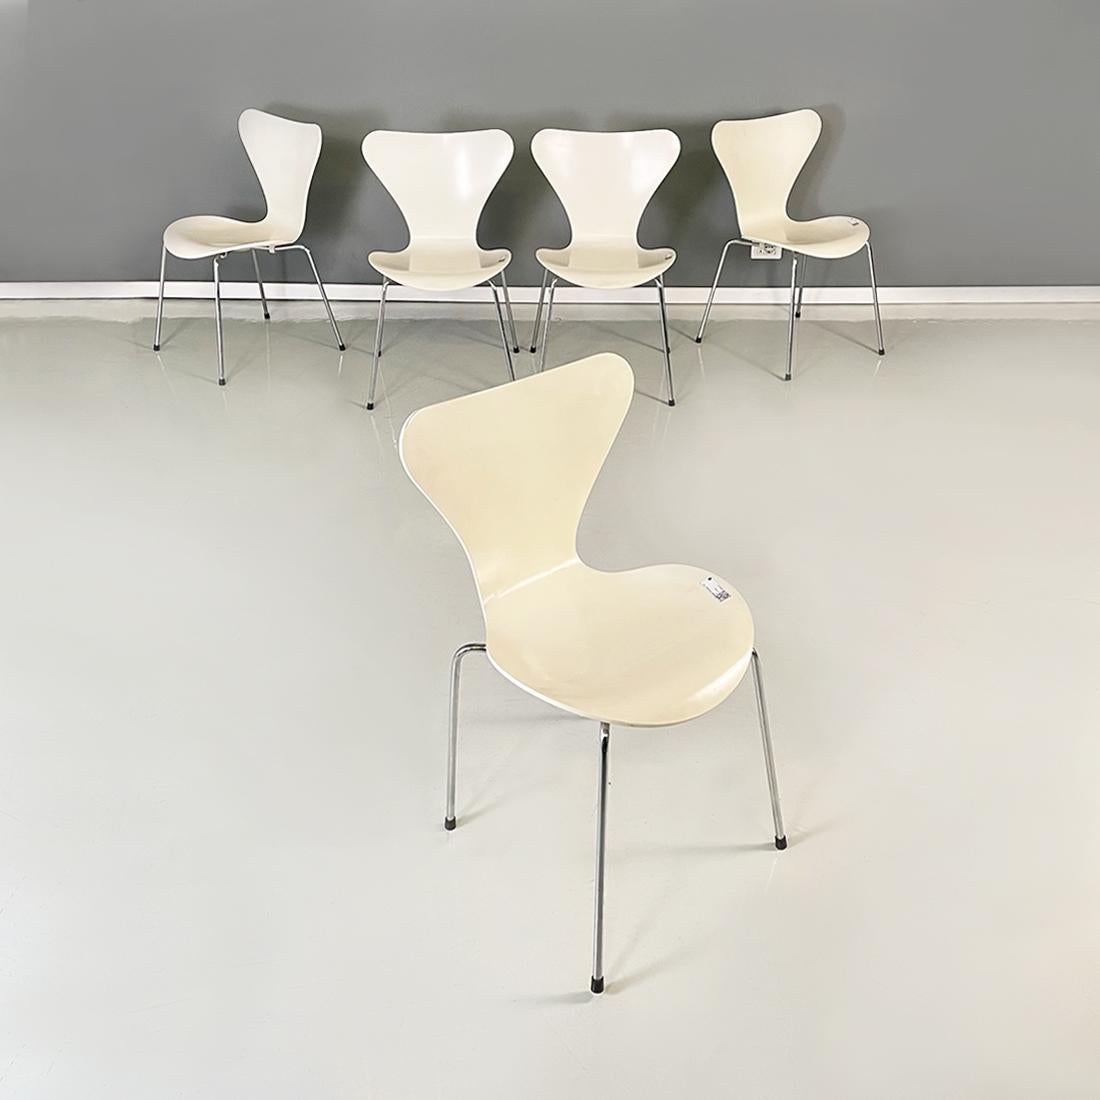 Danish Modern White Chairs of Series 7 by Arne Jacobsen for Fritz Hansen, 1970s For Sale 12